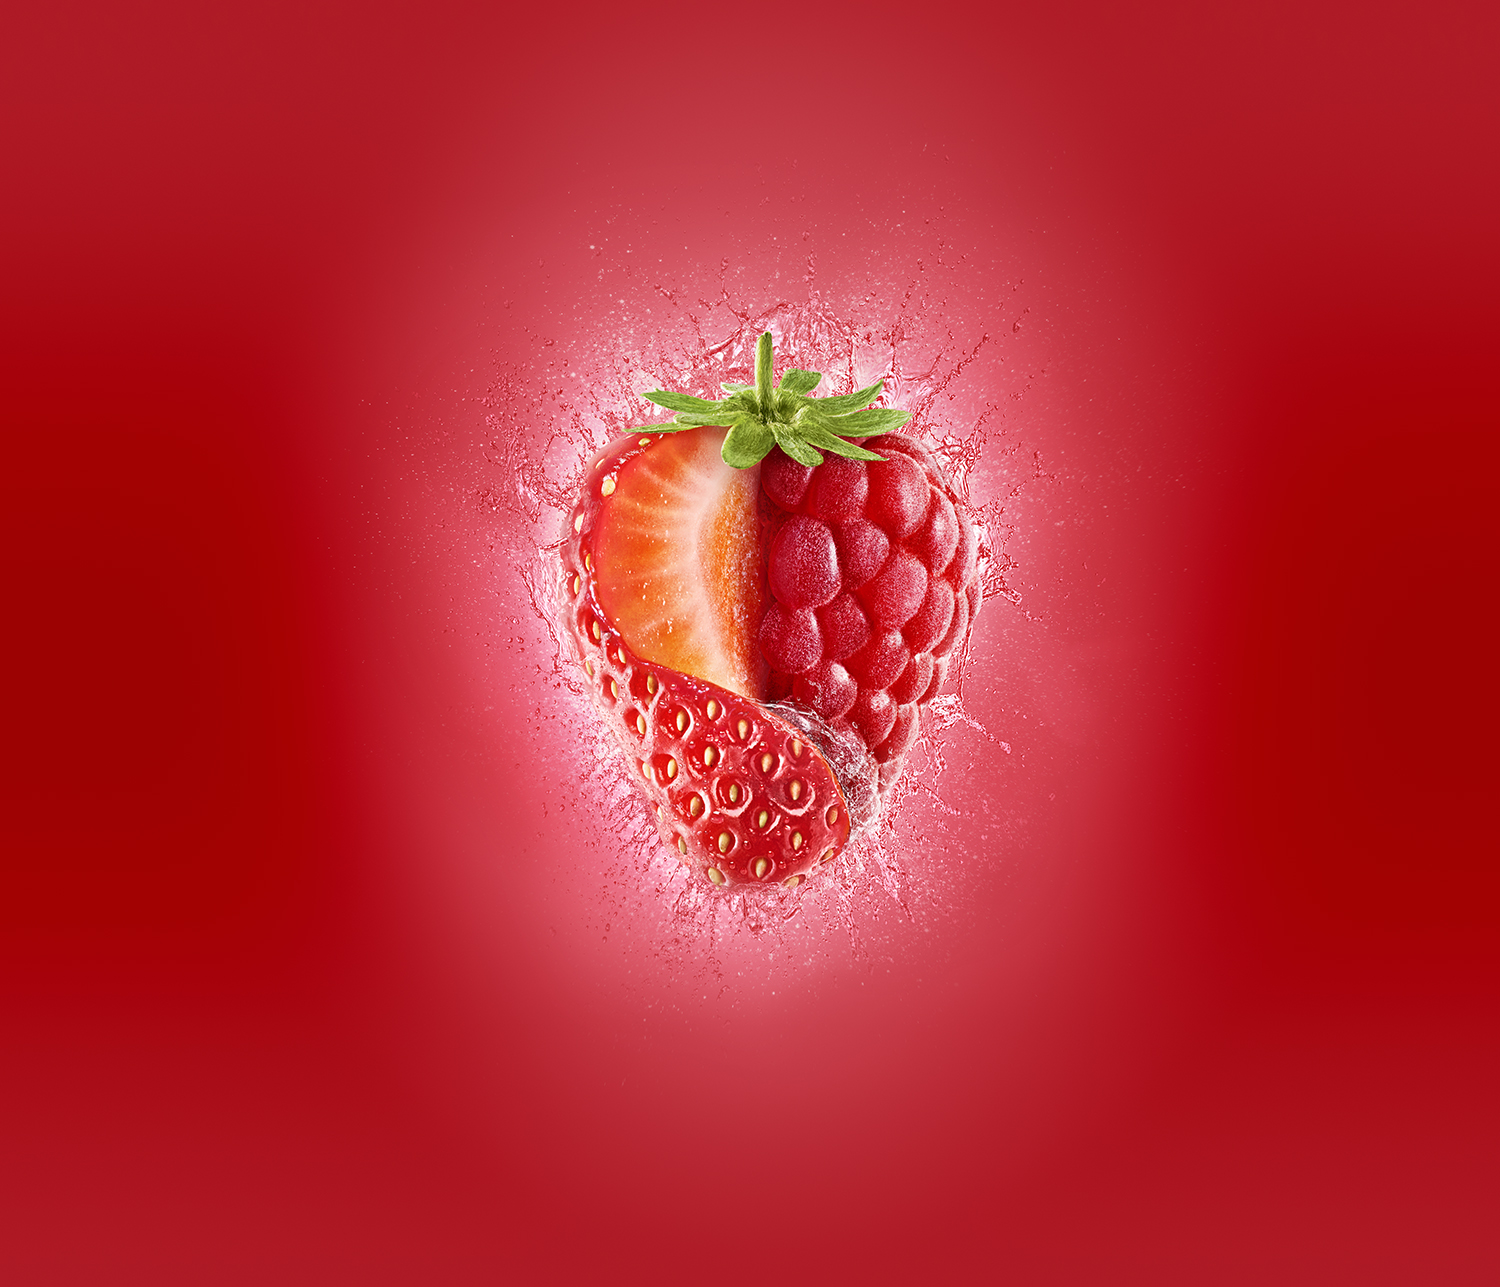 AdvertisingVype_Strawberry_Raspberry_M_w3d